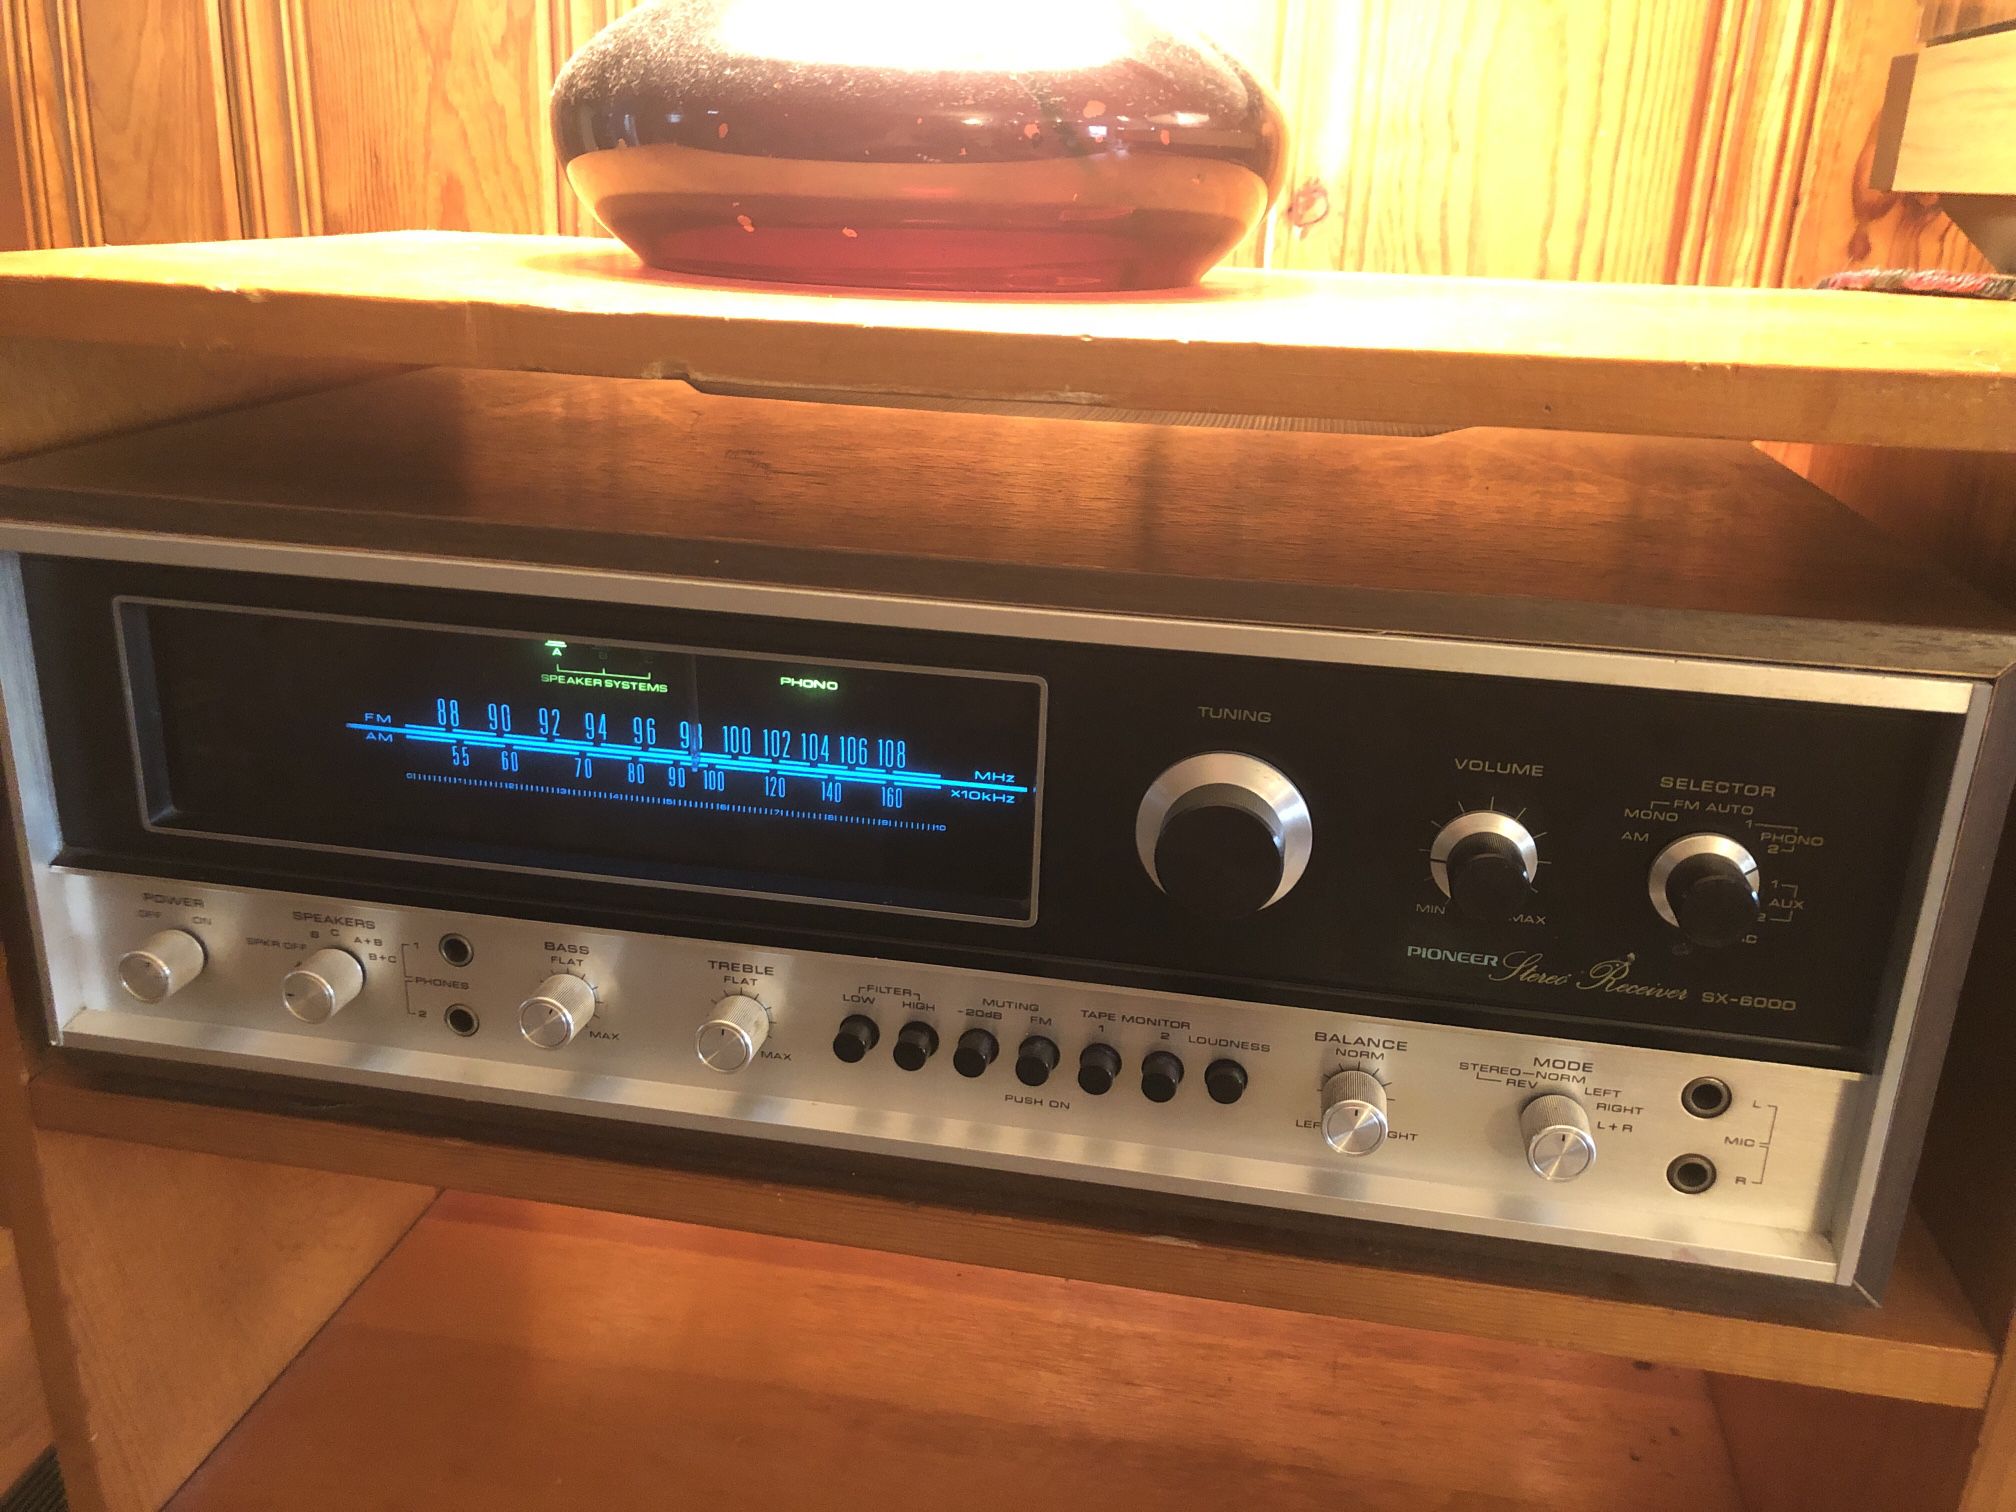 Vintage Sx-6000 Pioneer Stereo Receiver